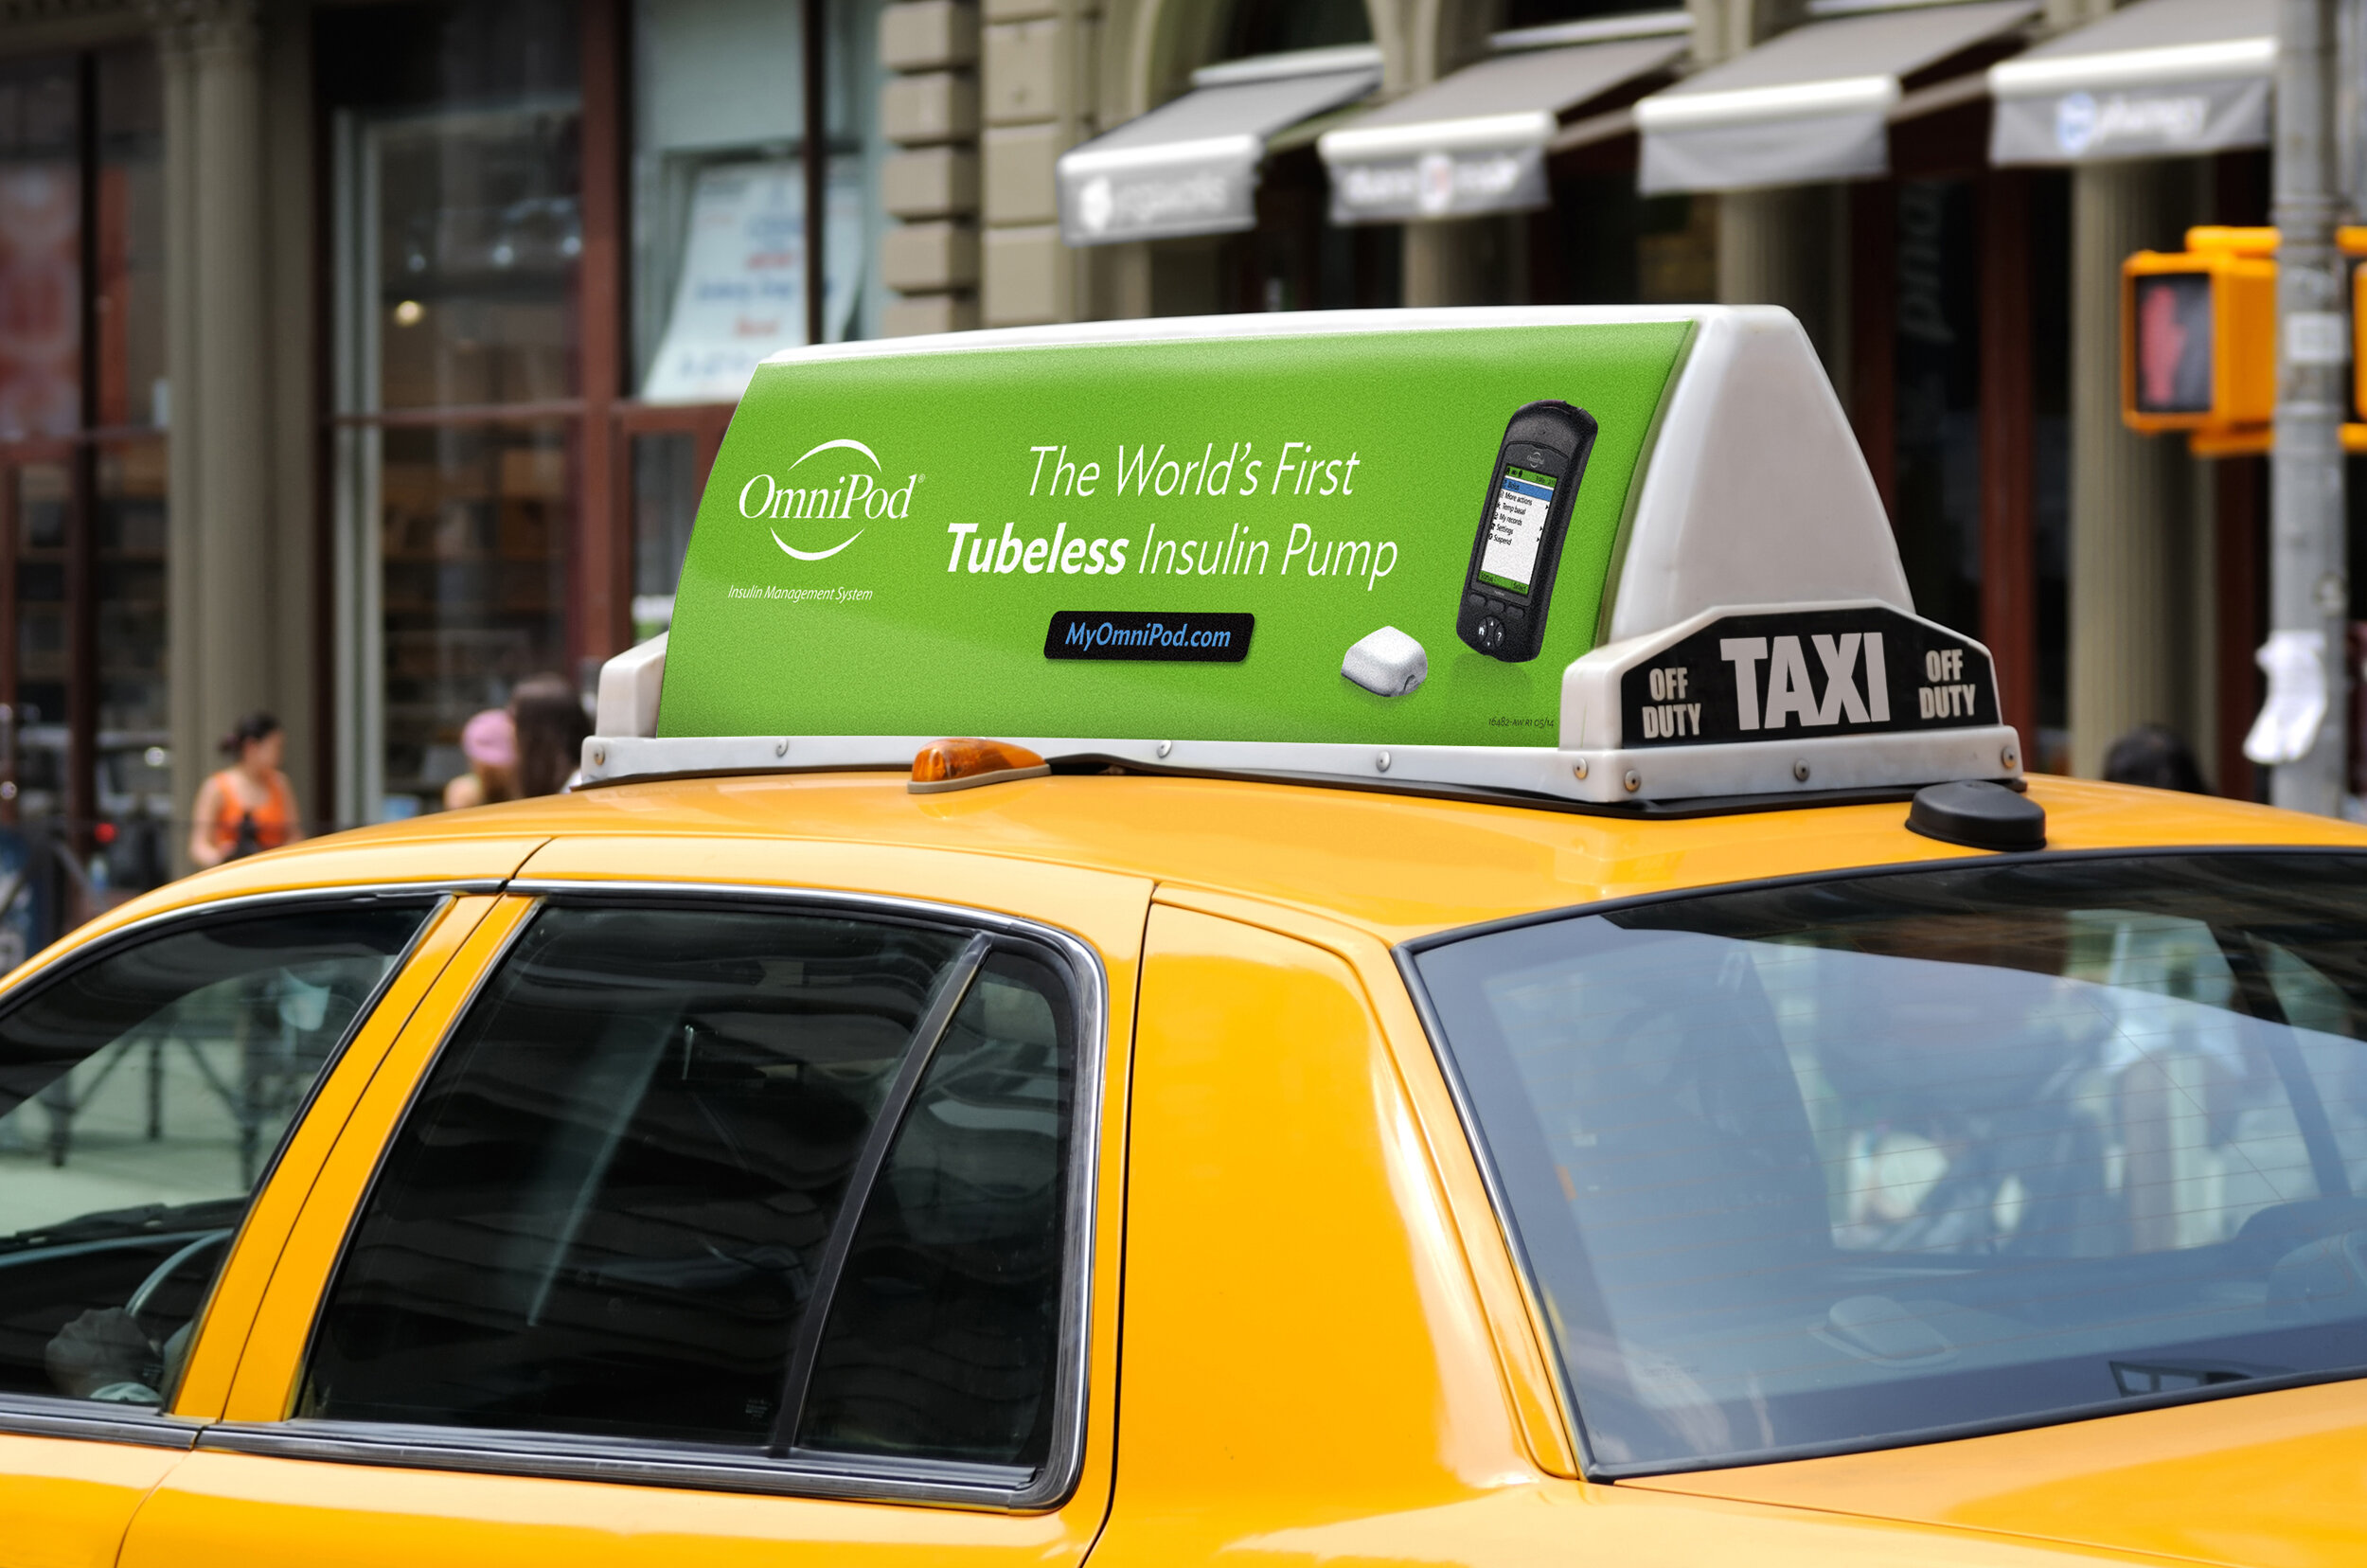   brand extension • taxi topper advertisement  • designer/director: Michael Balint 